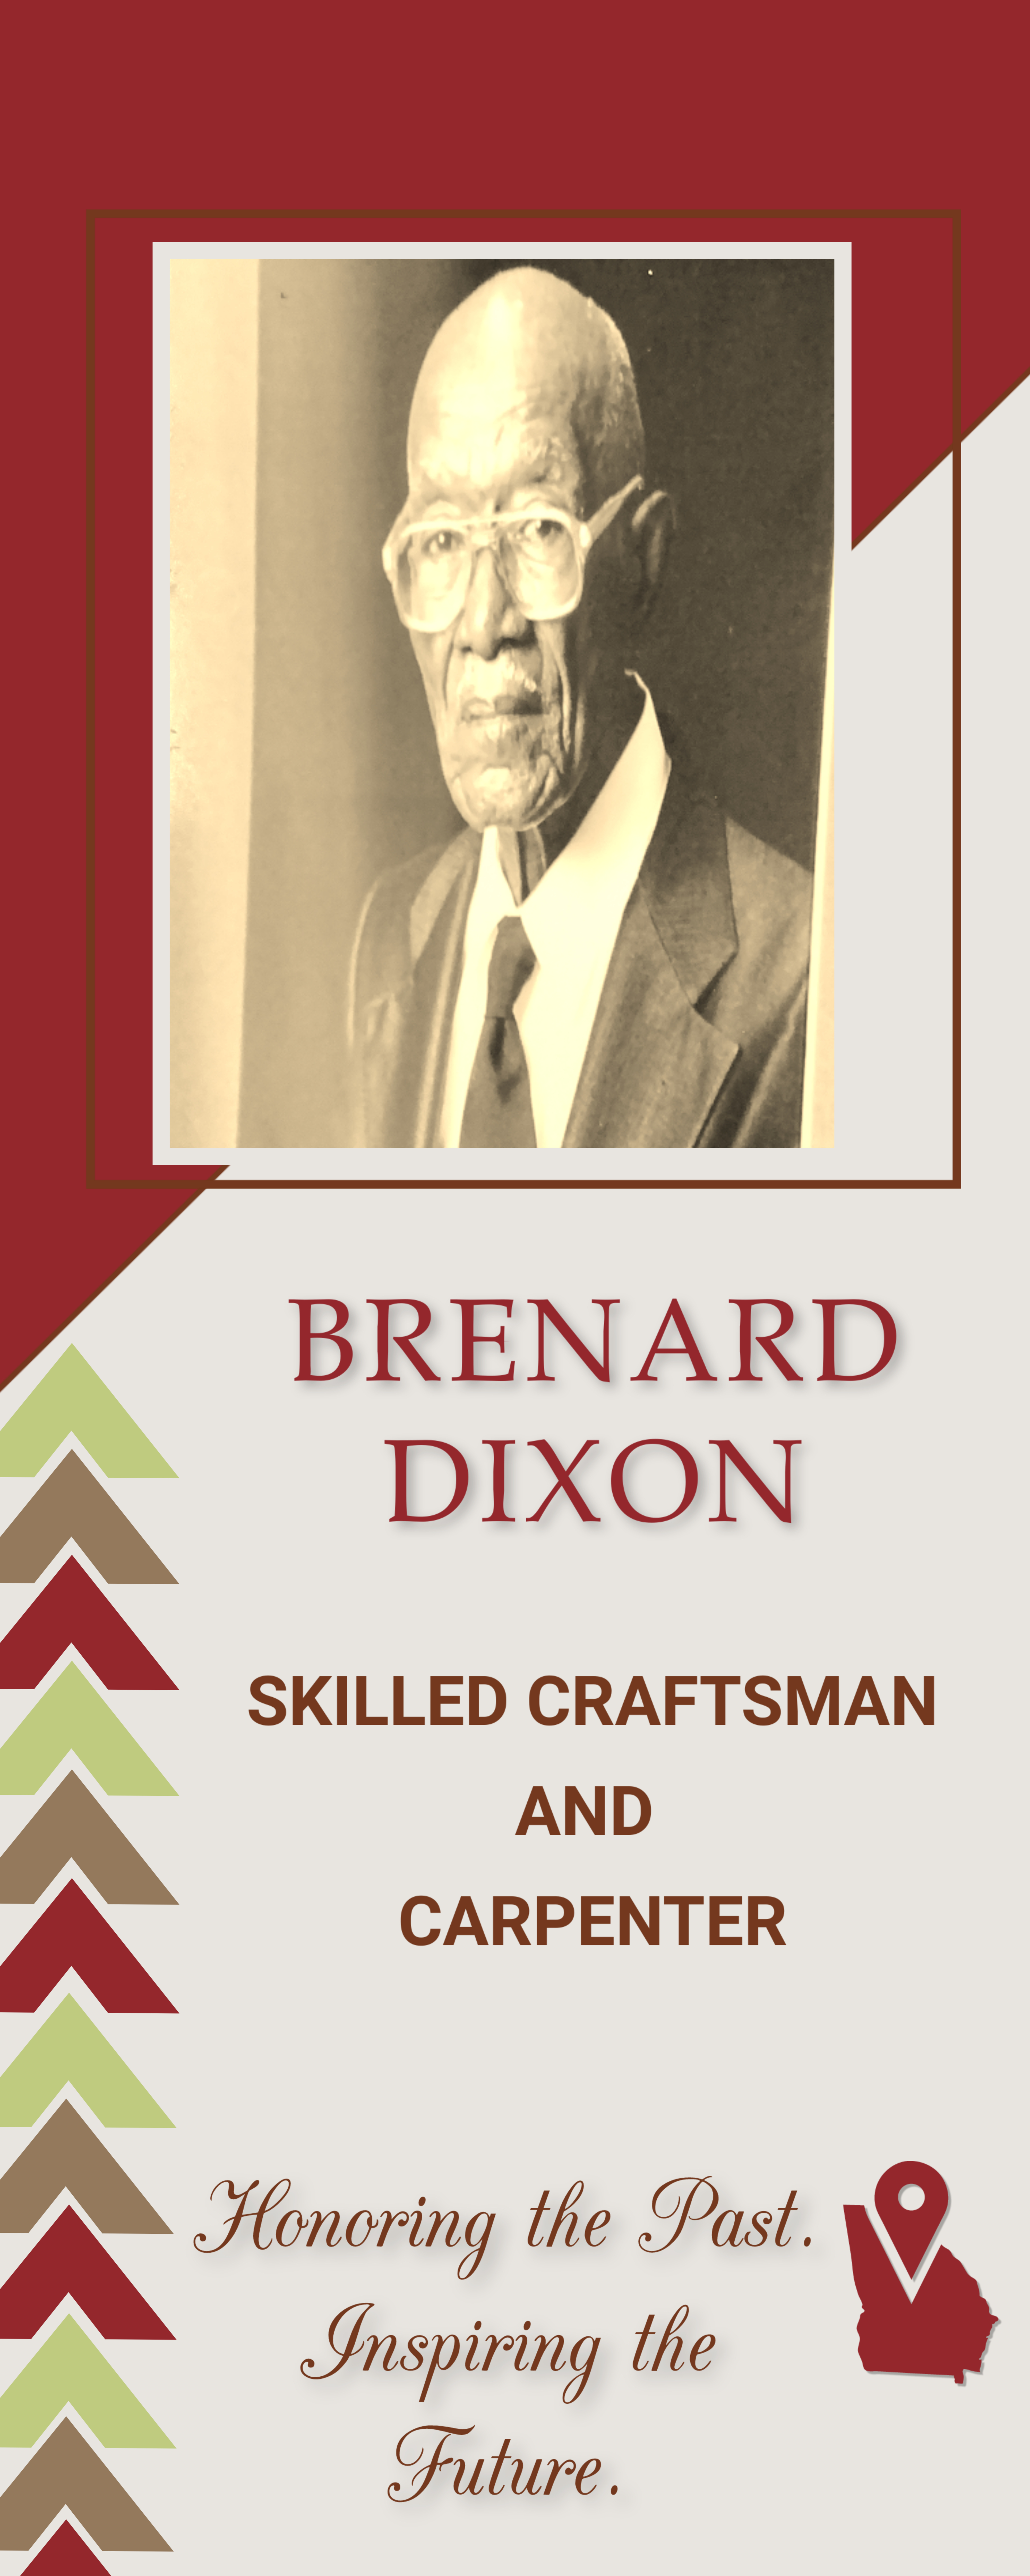 Brenard Dixon